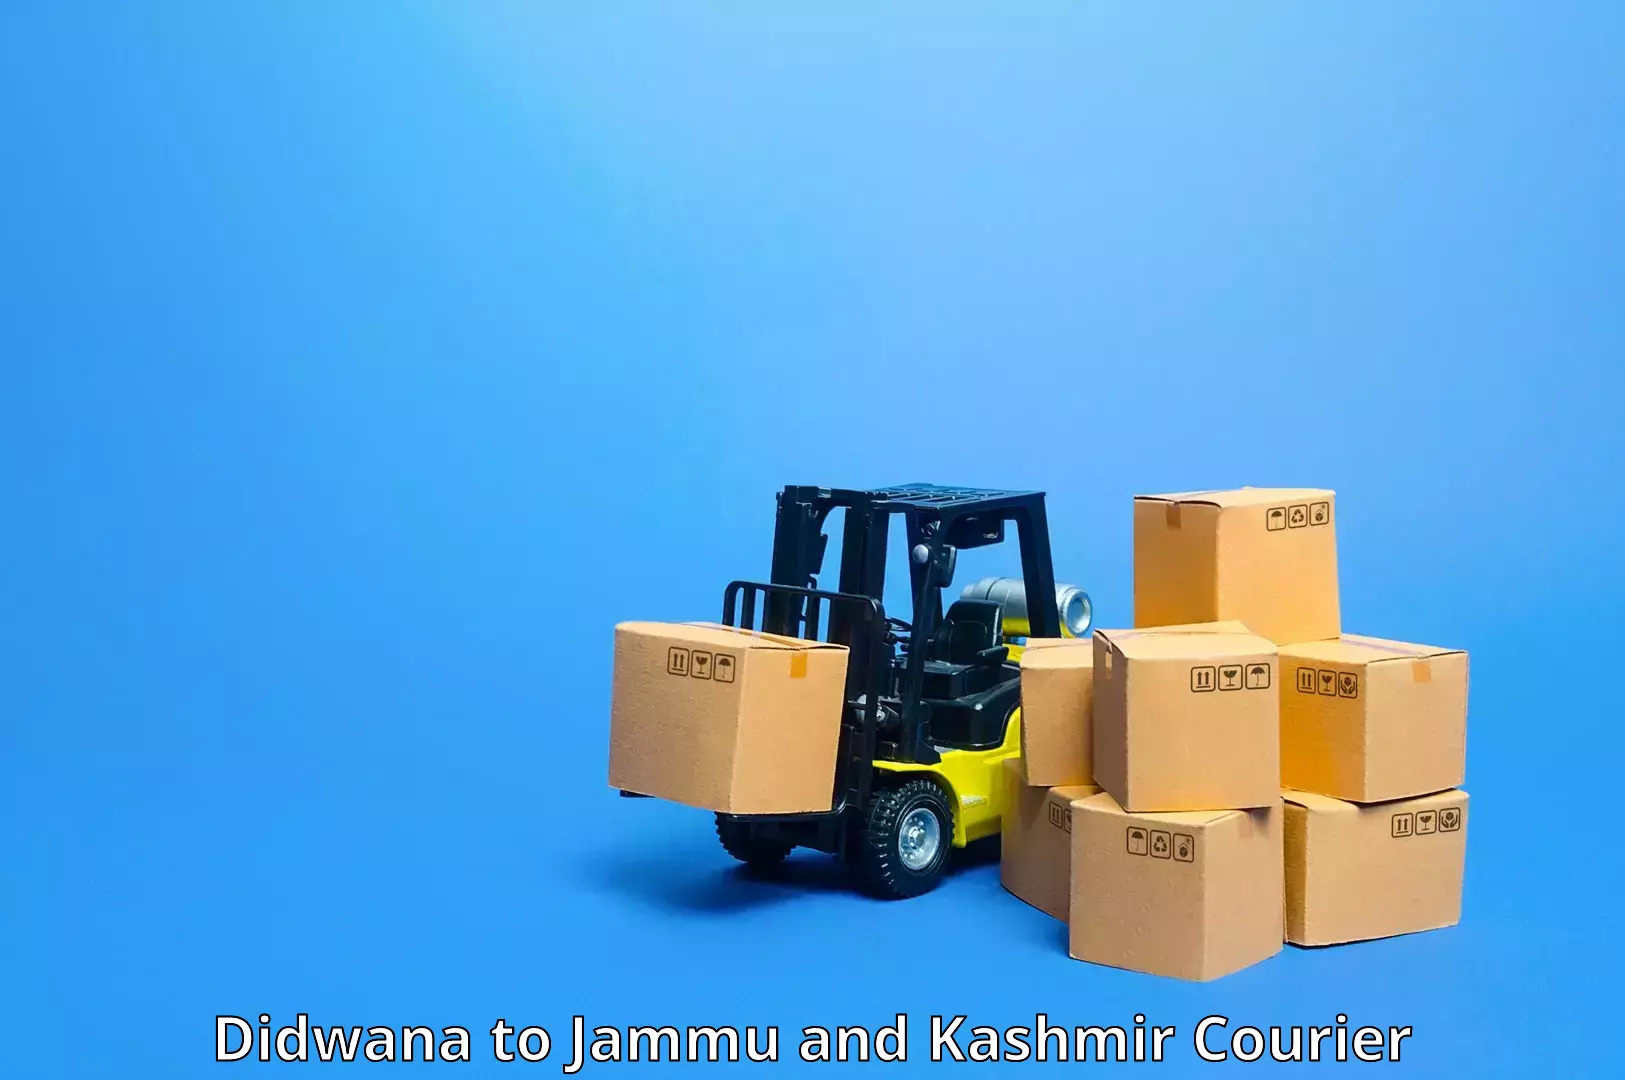 Courier service partnerships Didwana to Nagrota